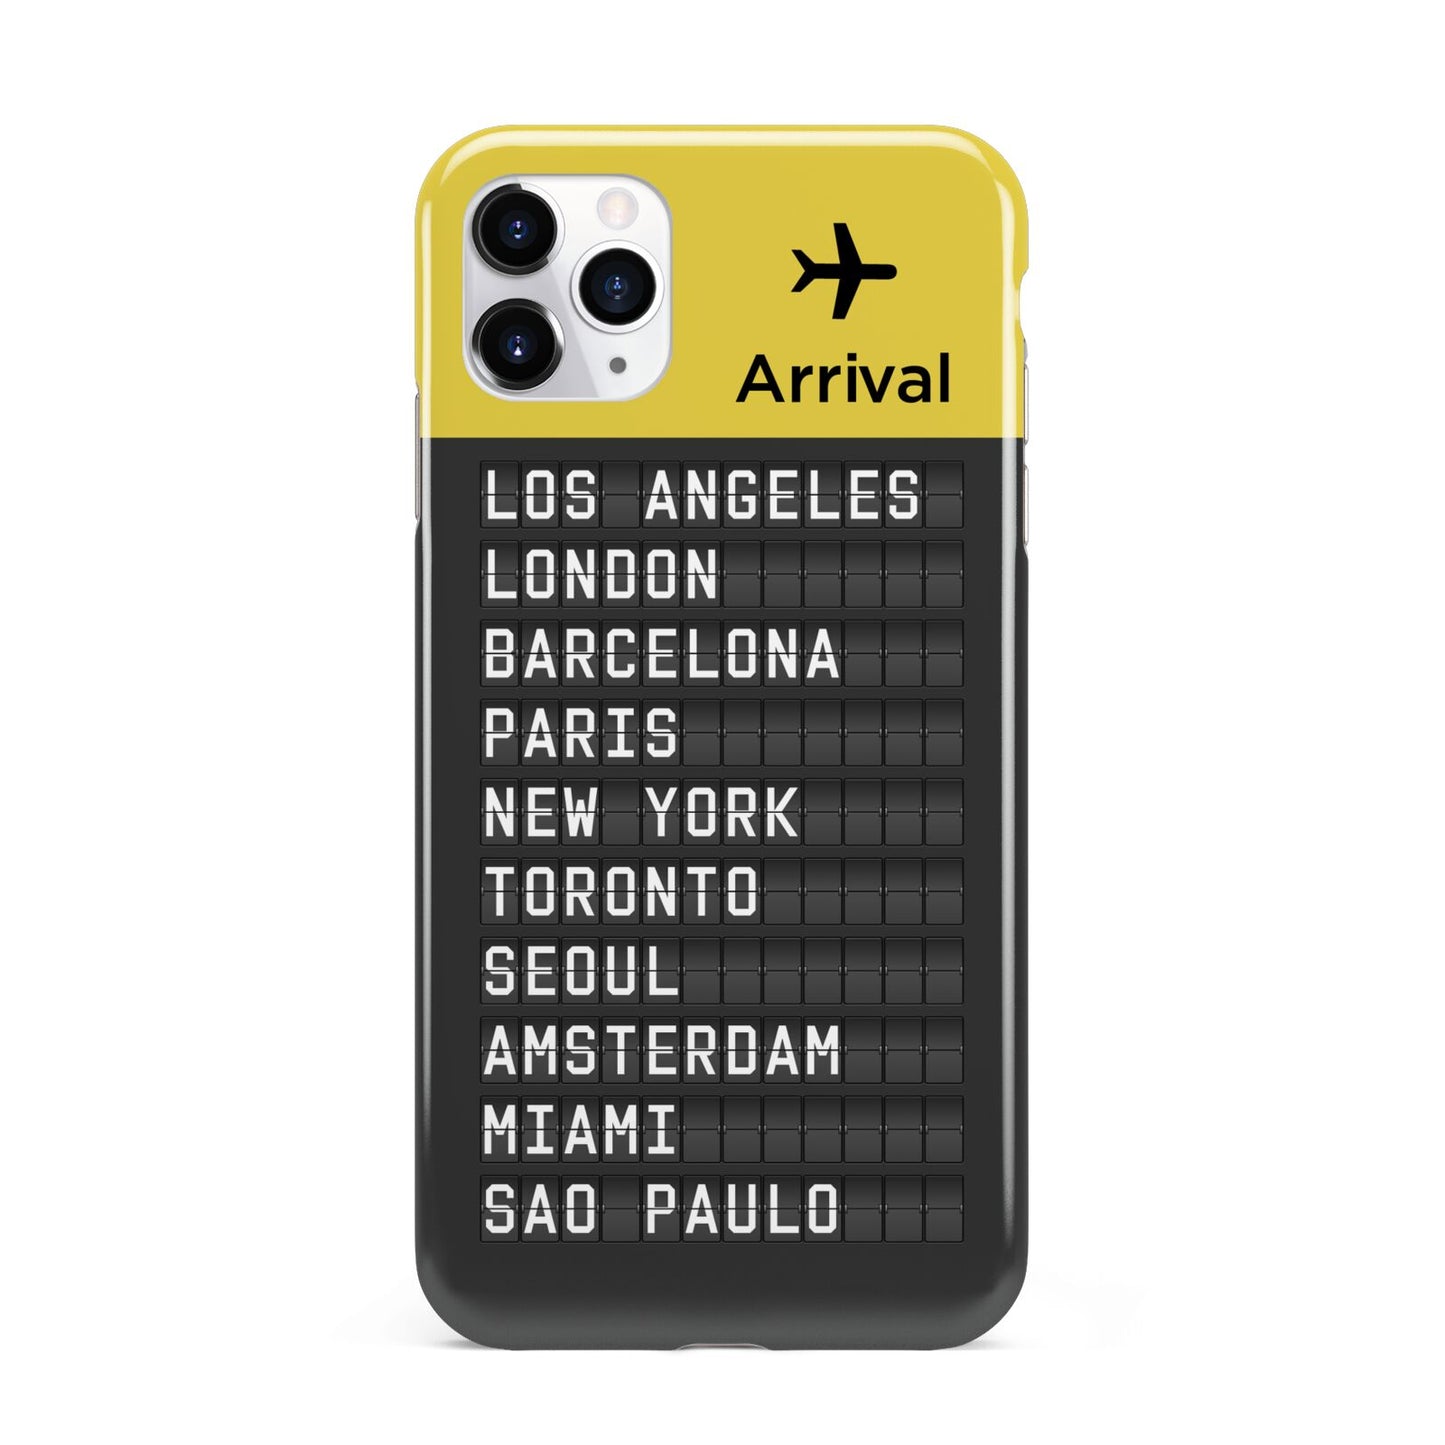 Airport Arrivals Board iPhone 11 Pro Max 3D Tough Case